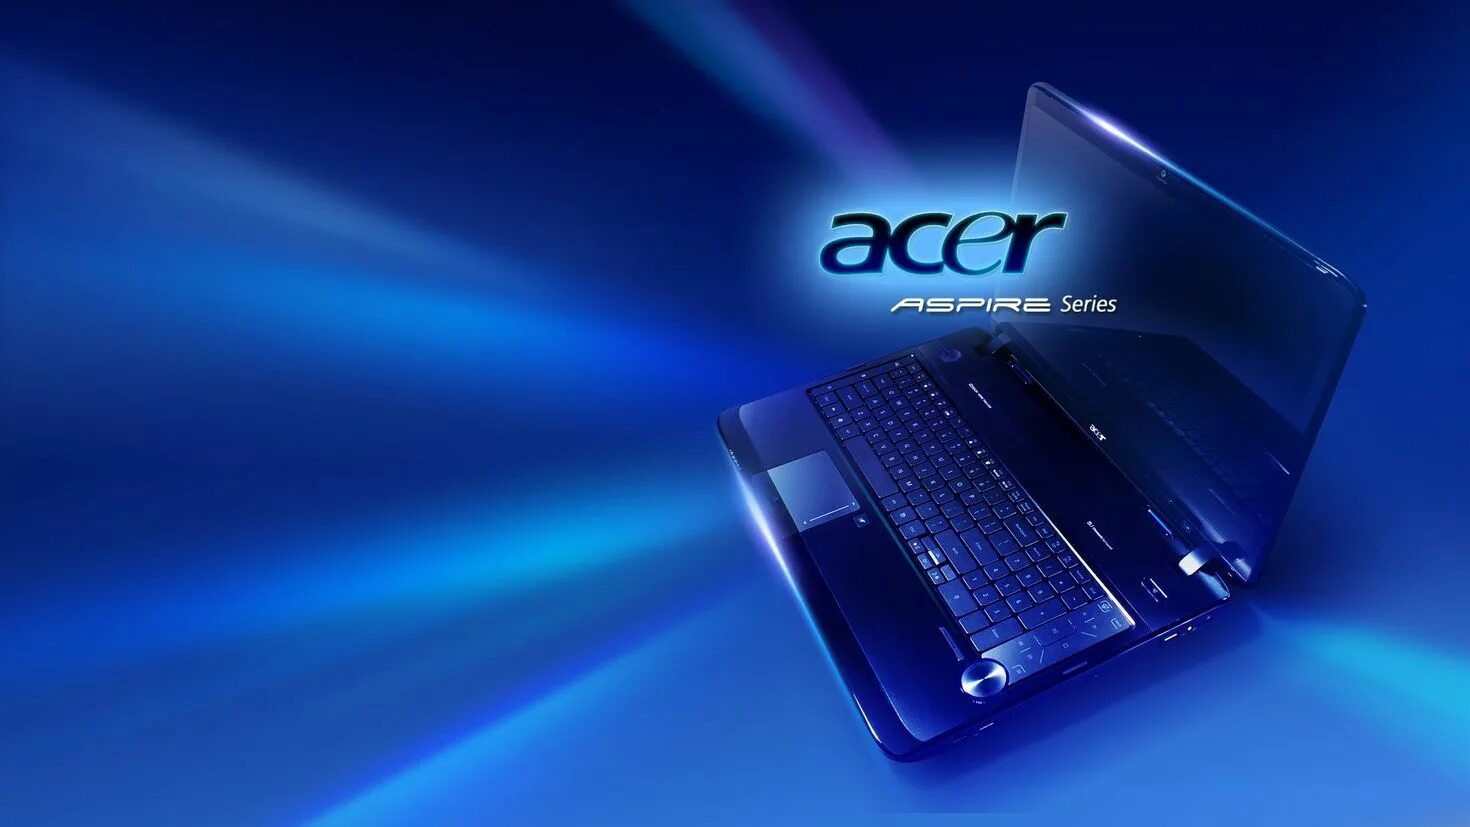 Kompyuter uchun rasmlar. Обои Acer Aspire 5750g. Acer Aspire компьютер 2013. Acer Aspire hd1080. Обои Acer Aspire one d270.